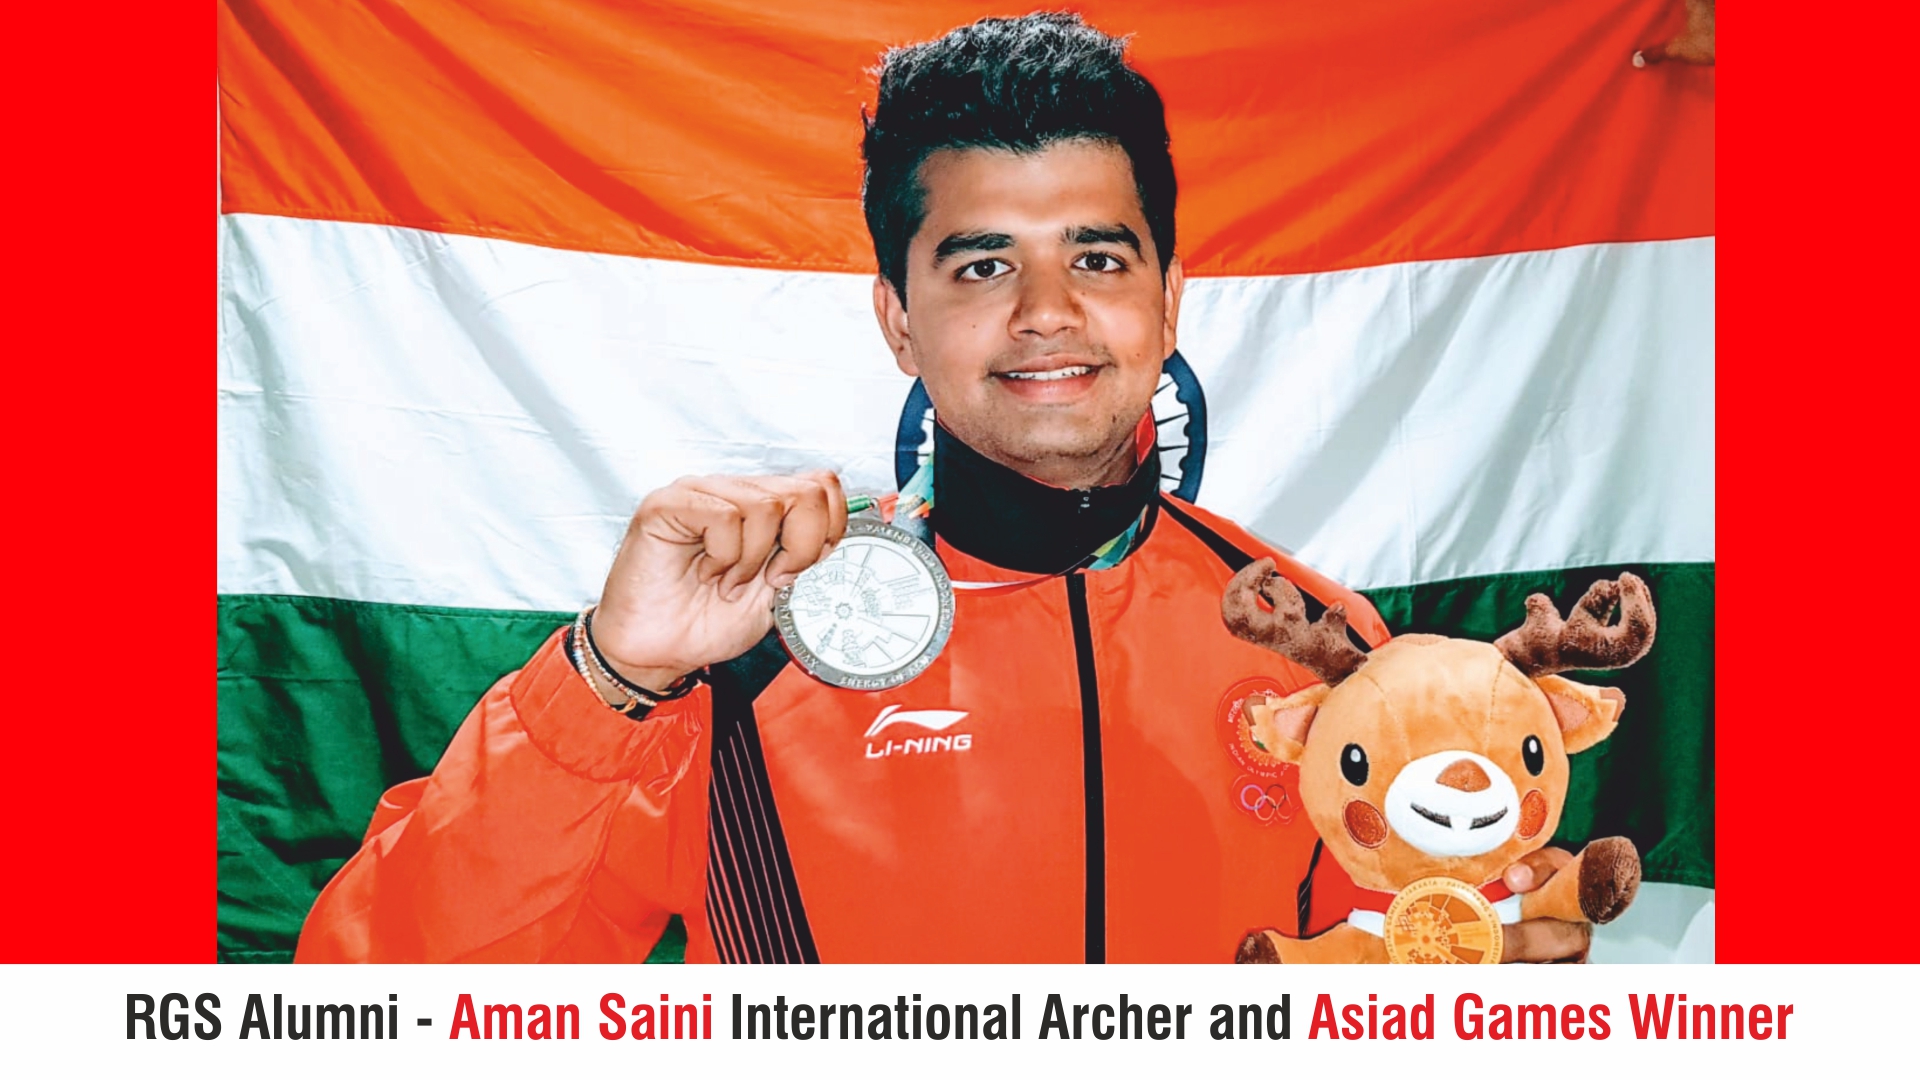 Aman Saini Asiad Games Winner Richmondd Global School Delhi